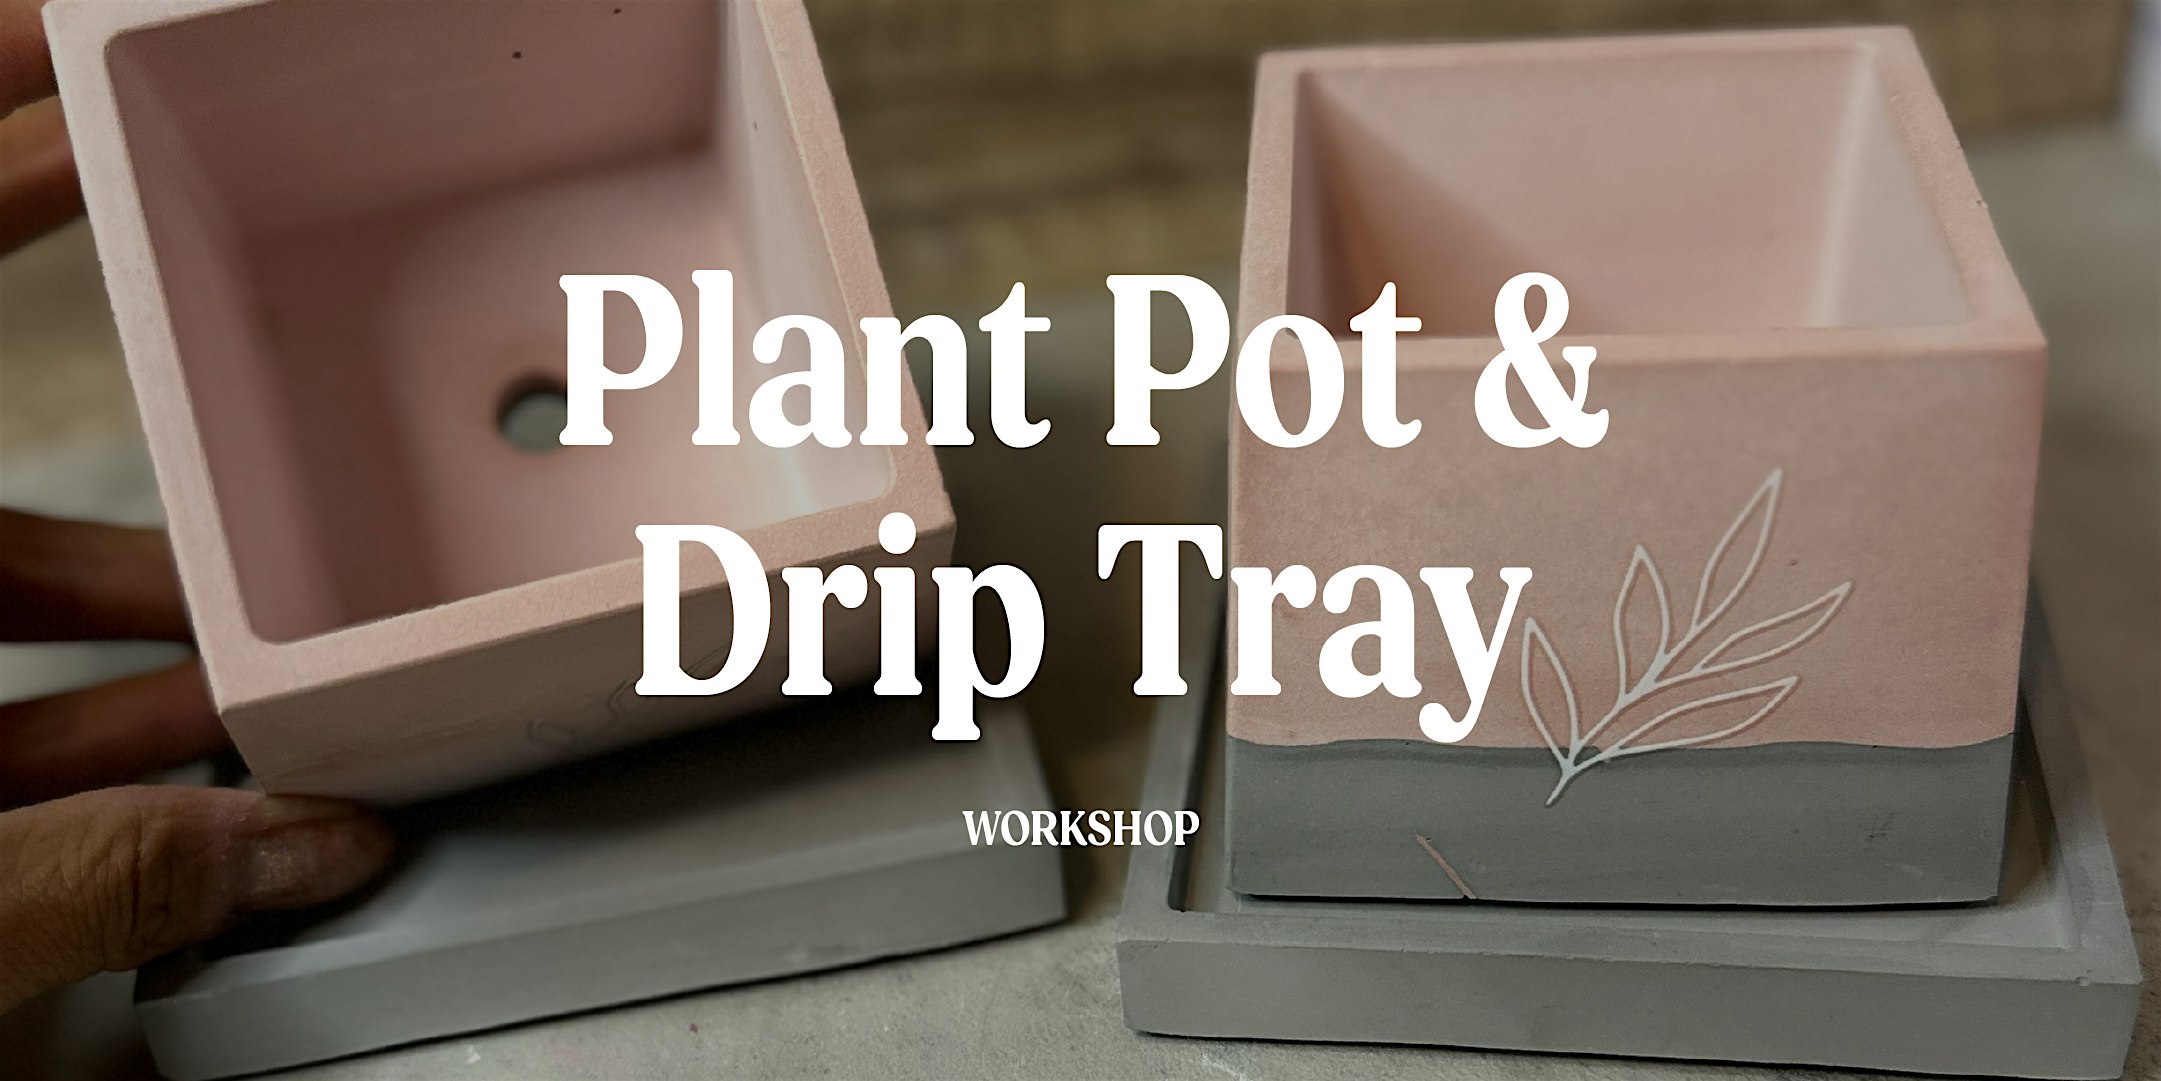 Plant Pot & Drip Tray Workshop